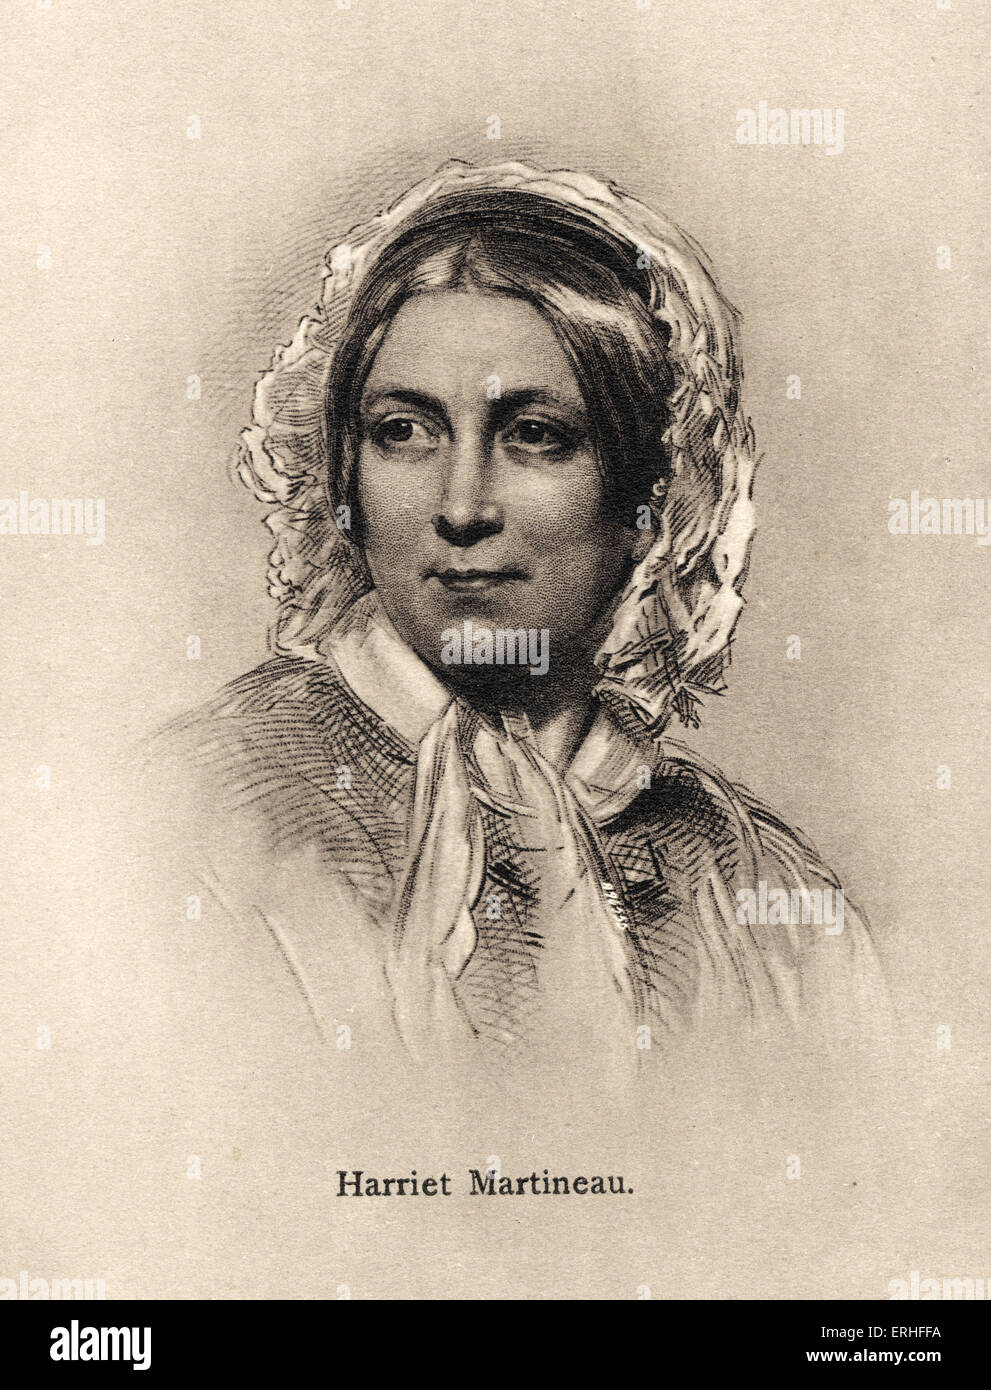 Harriet Martineau - portrait - English writer 12 June 1802 - 27 June 1876 Stock Photo